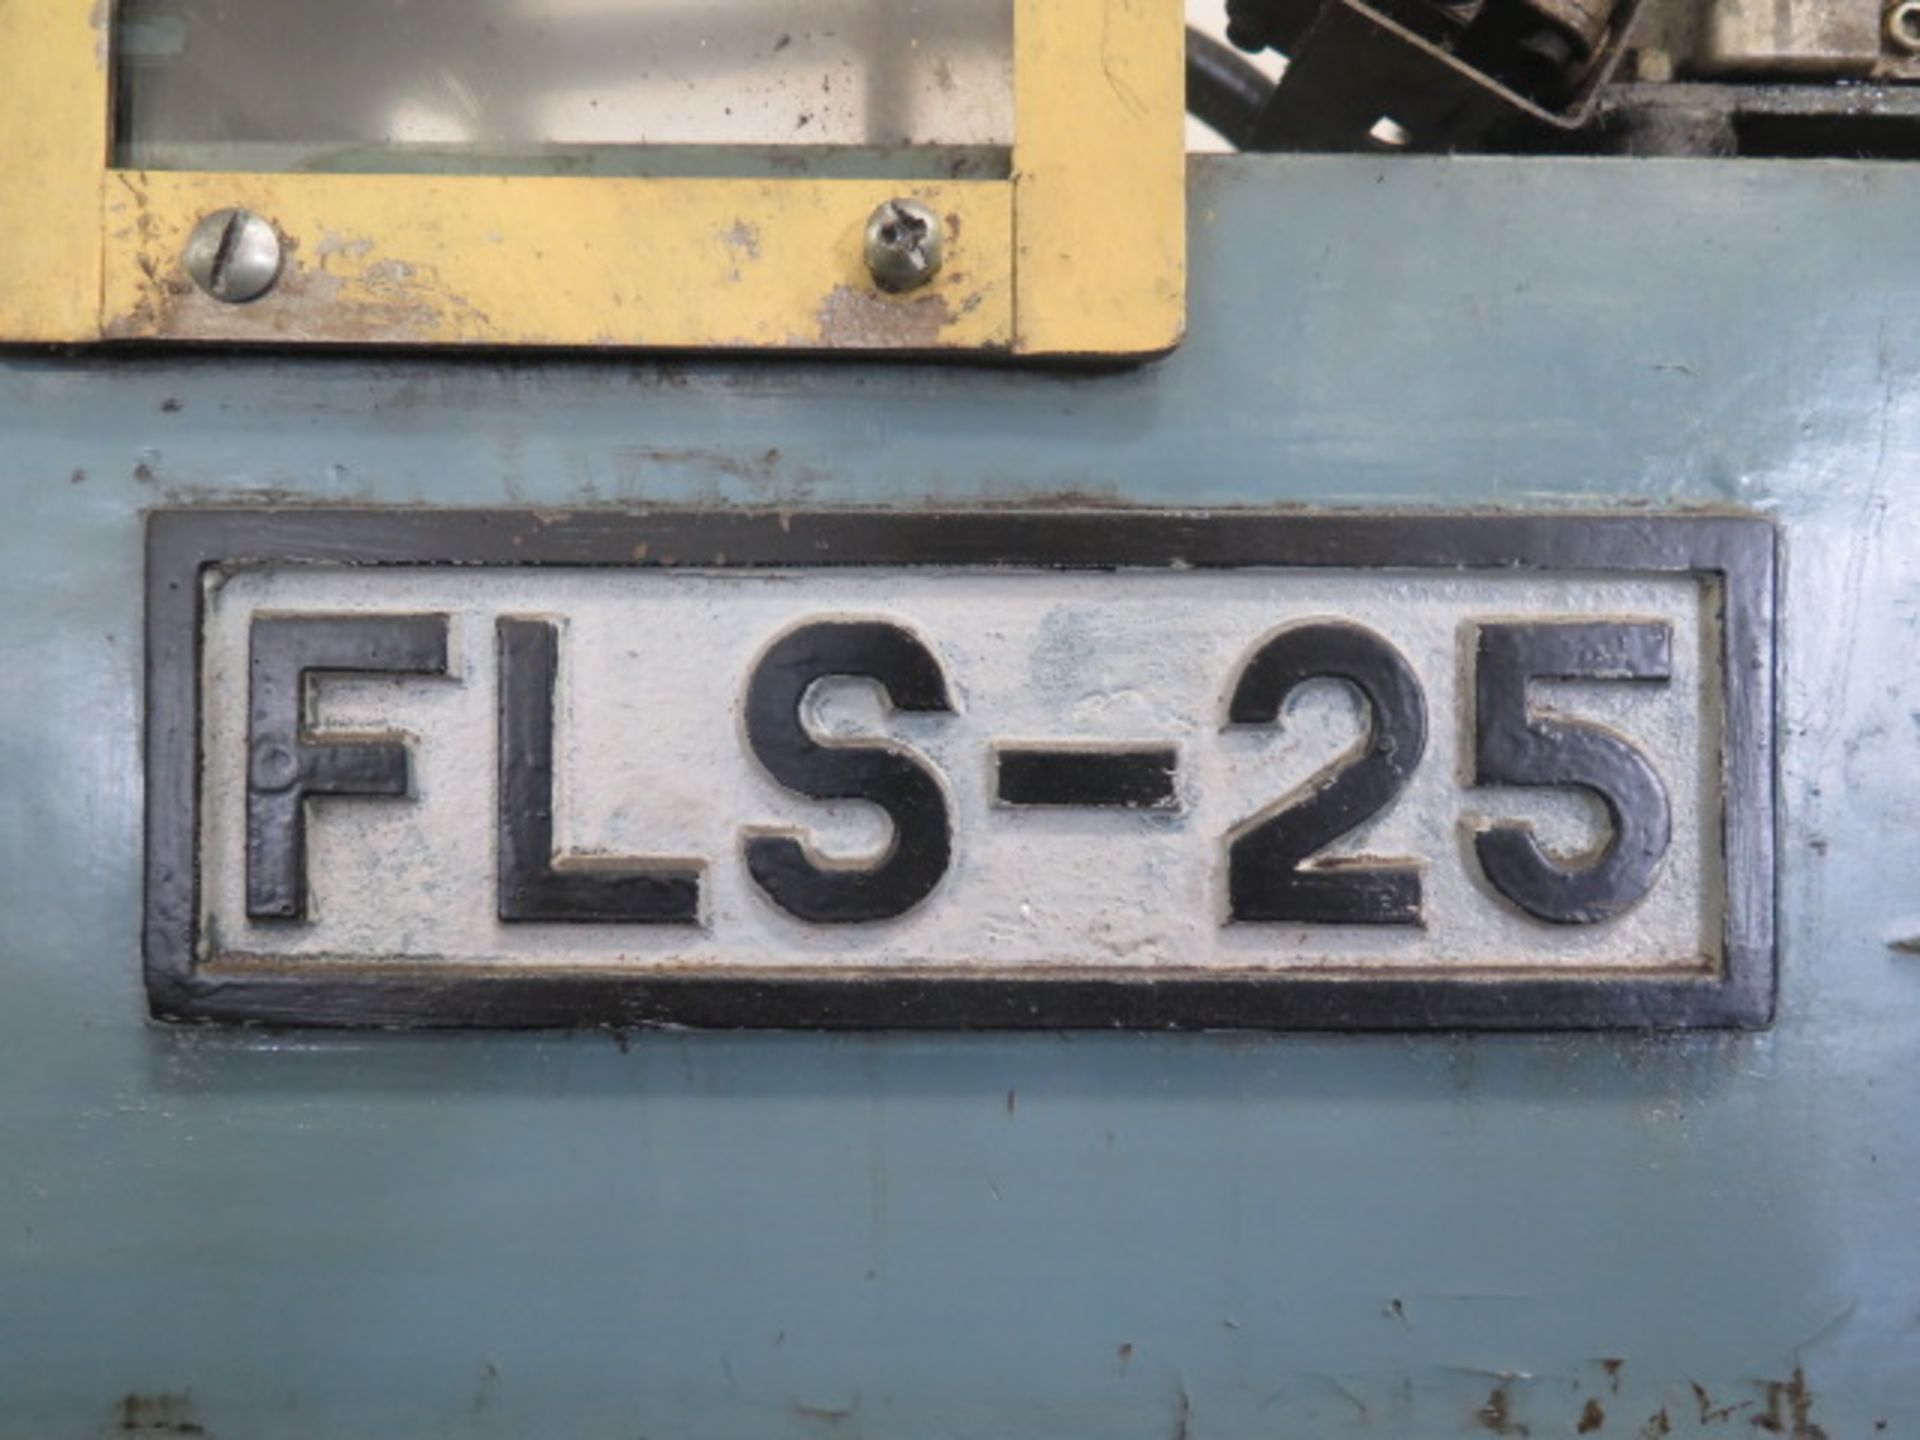 Hidaka FLS-25 25 Ton High Speed Stamping Press w/ Wintriss Clutch and Brake Controls, Die - Image 10 of 10